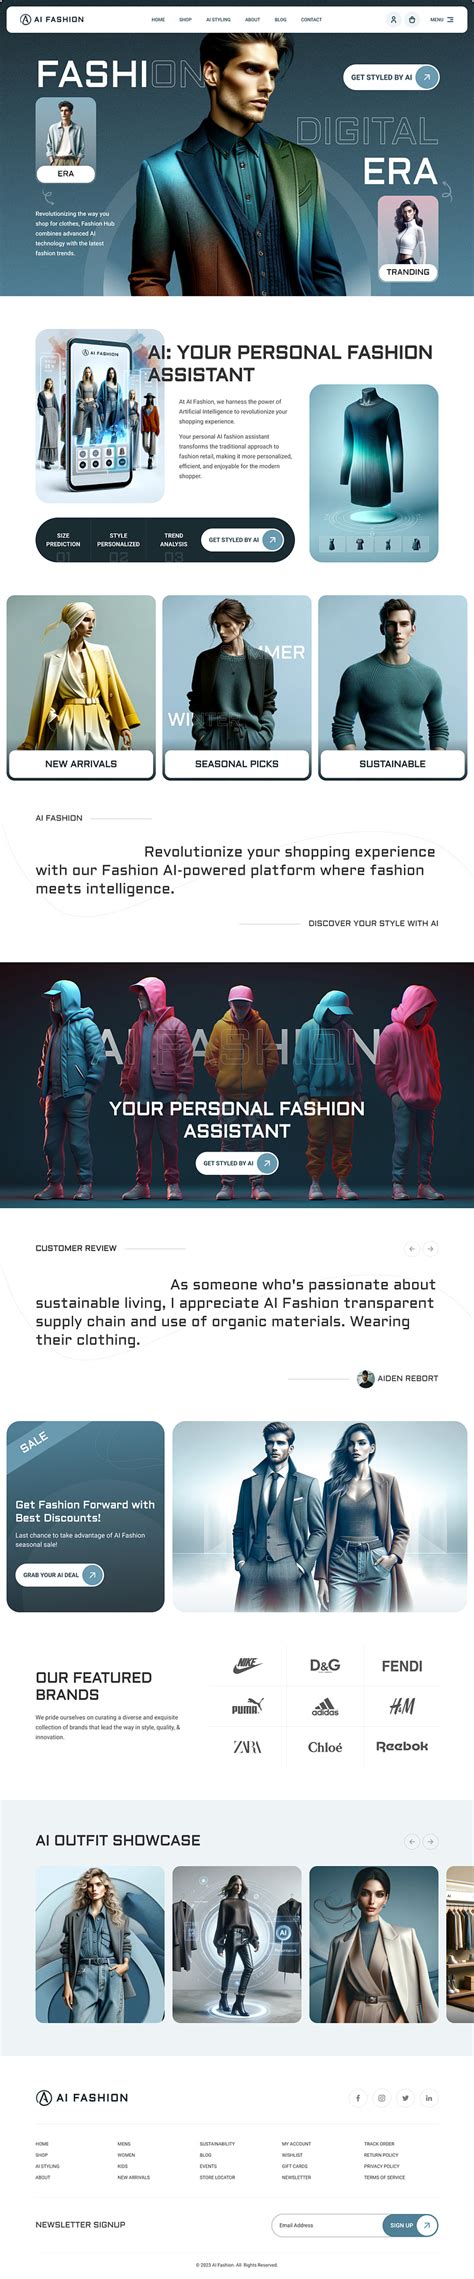 Ai Fashion Shopping Experience E Commerce Landing Page By Yudiz